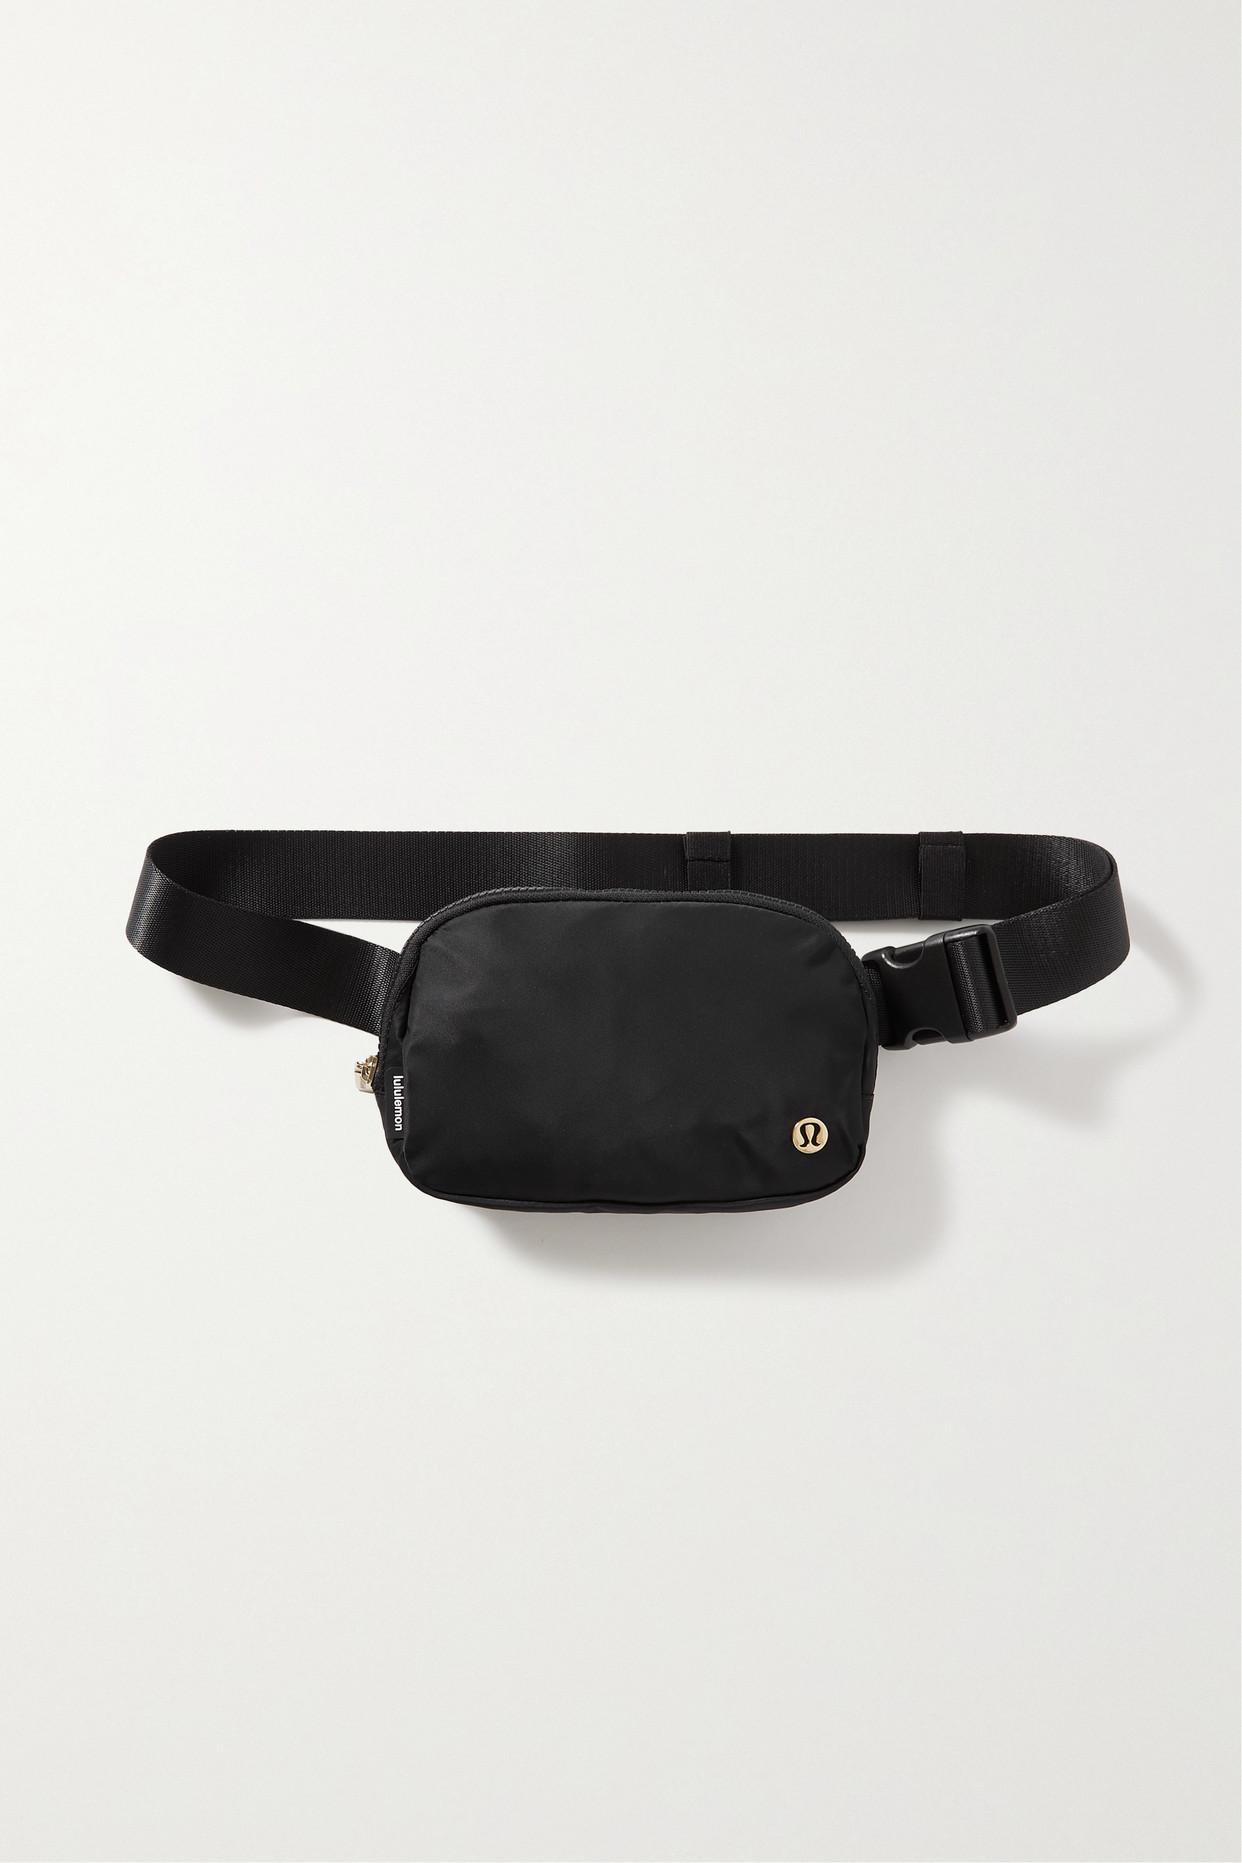 lululemon athletica Everywhere Shell Belt Bag in Black